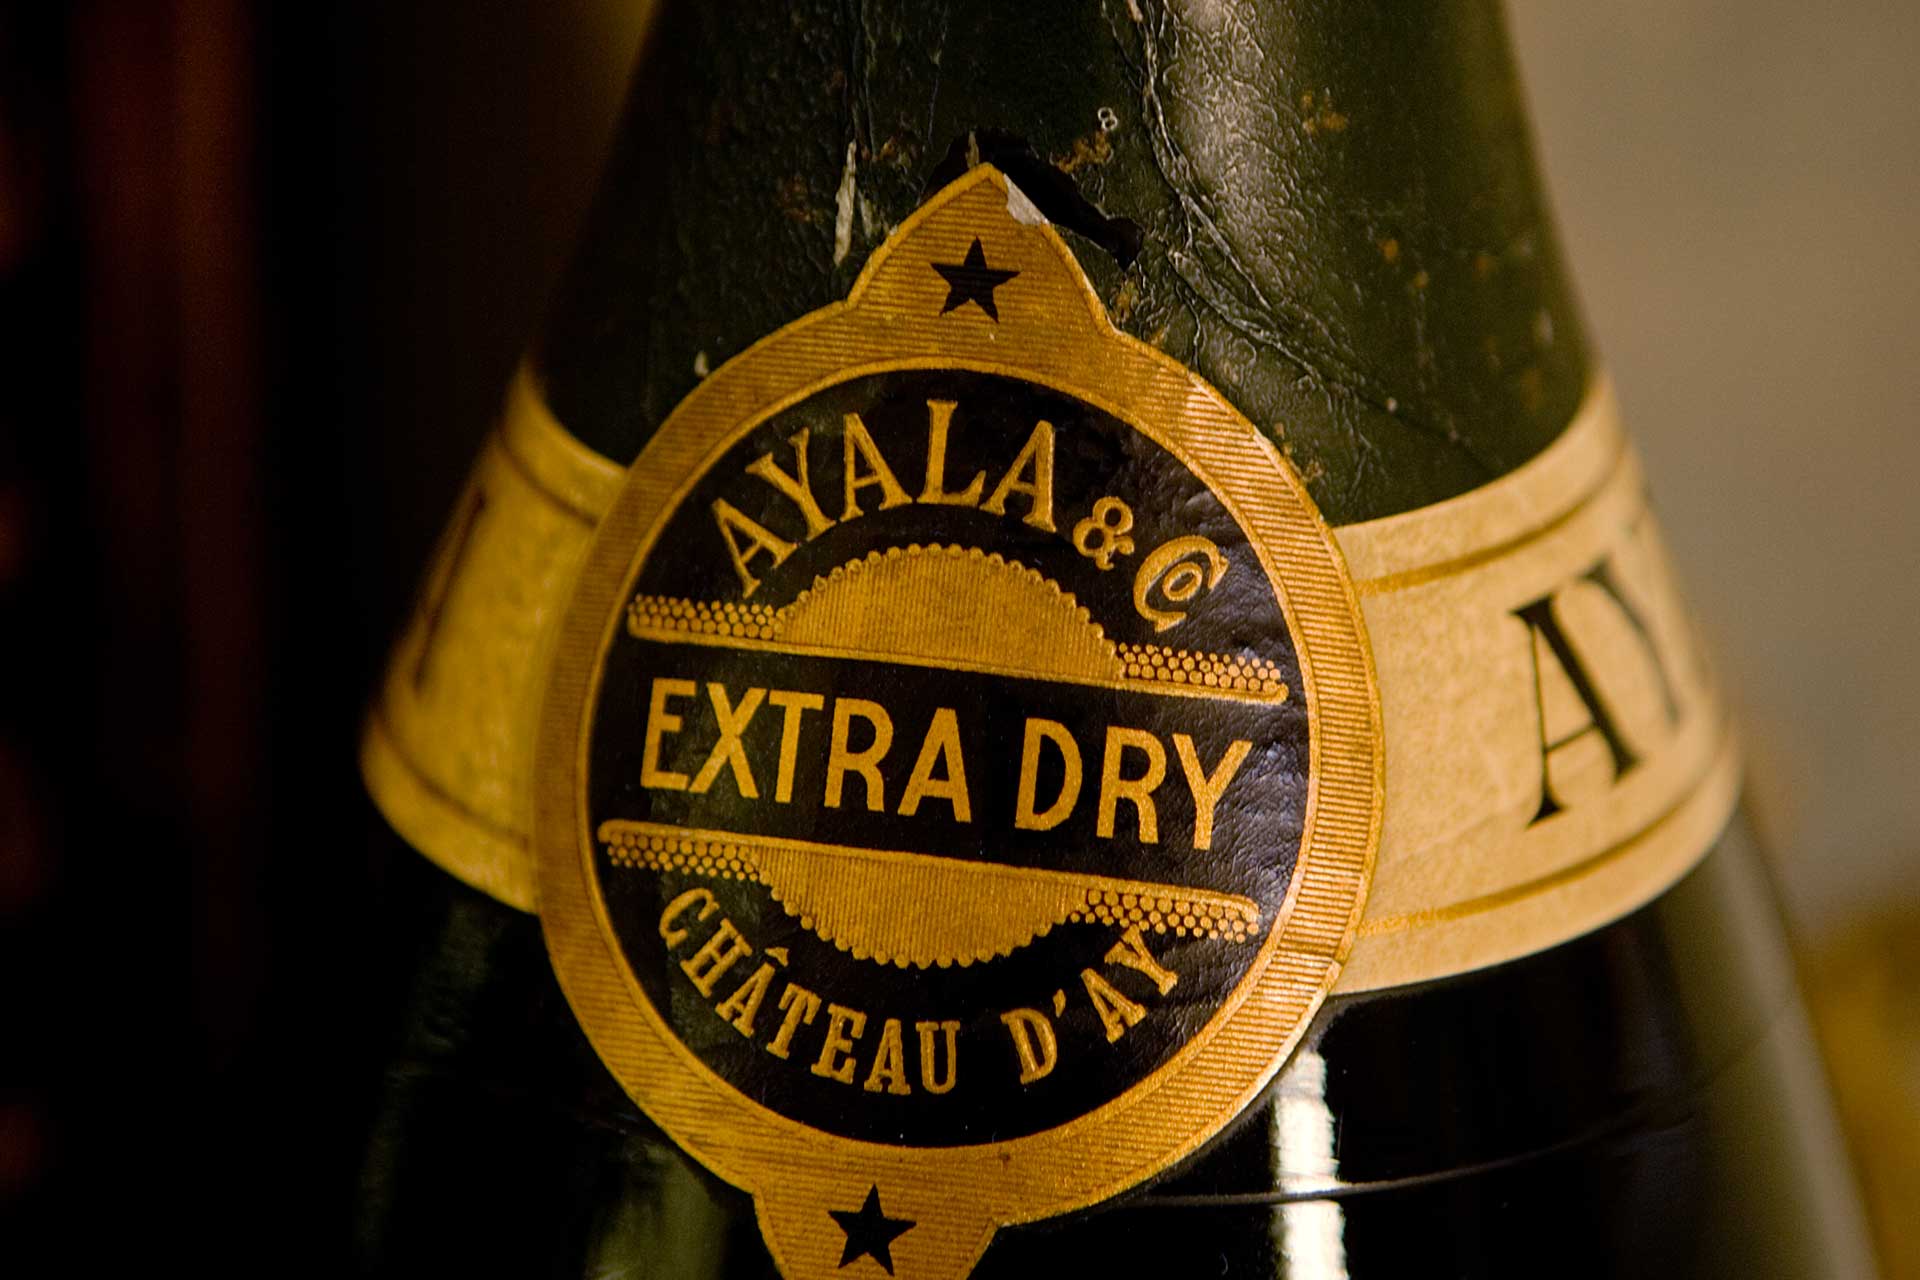 Ayala シャンパンの歴史